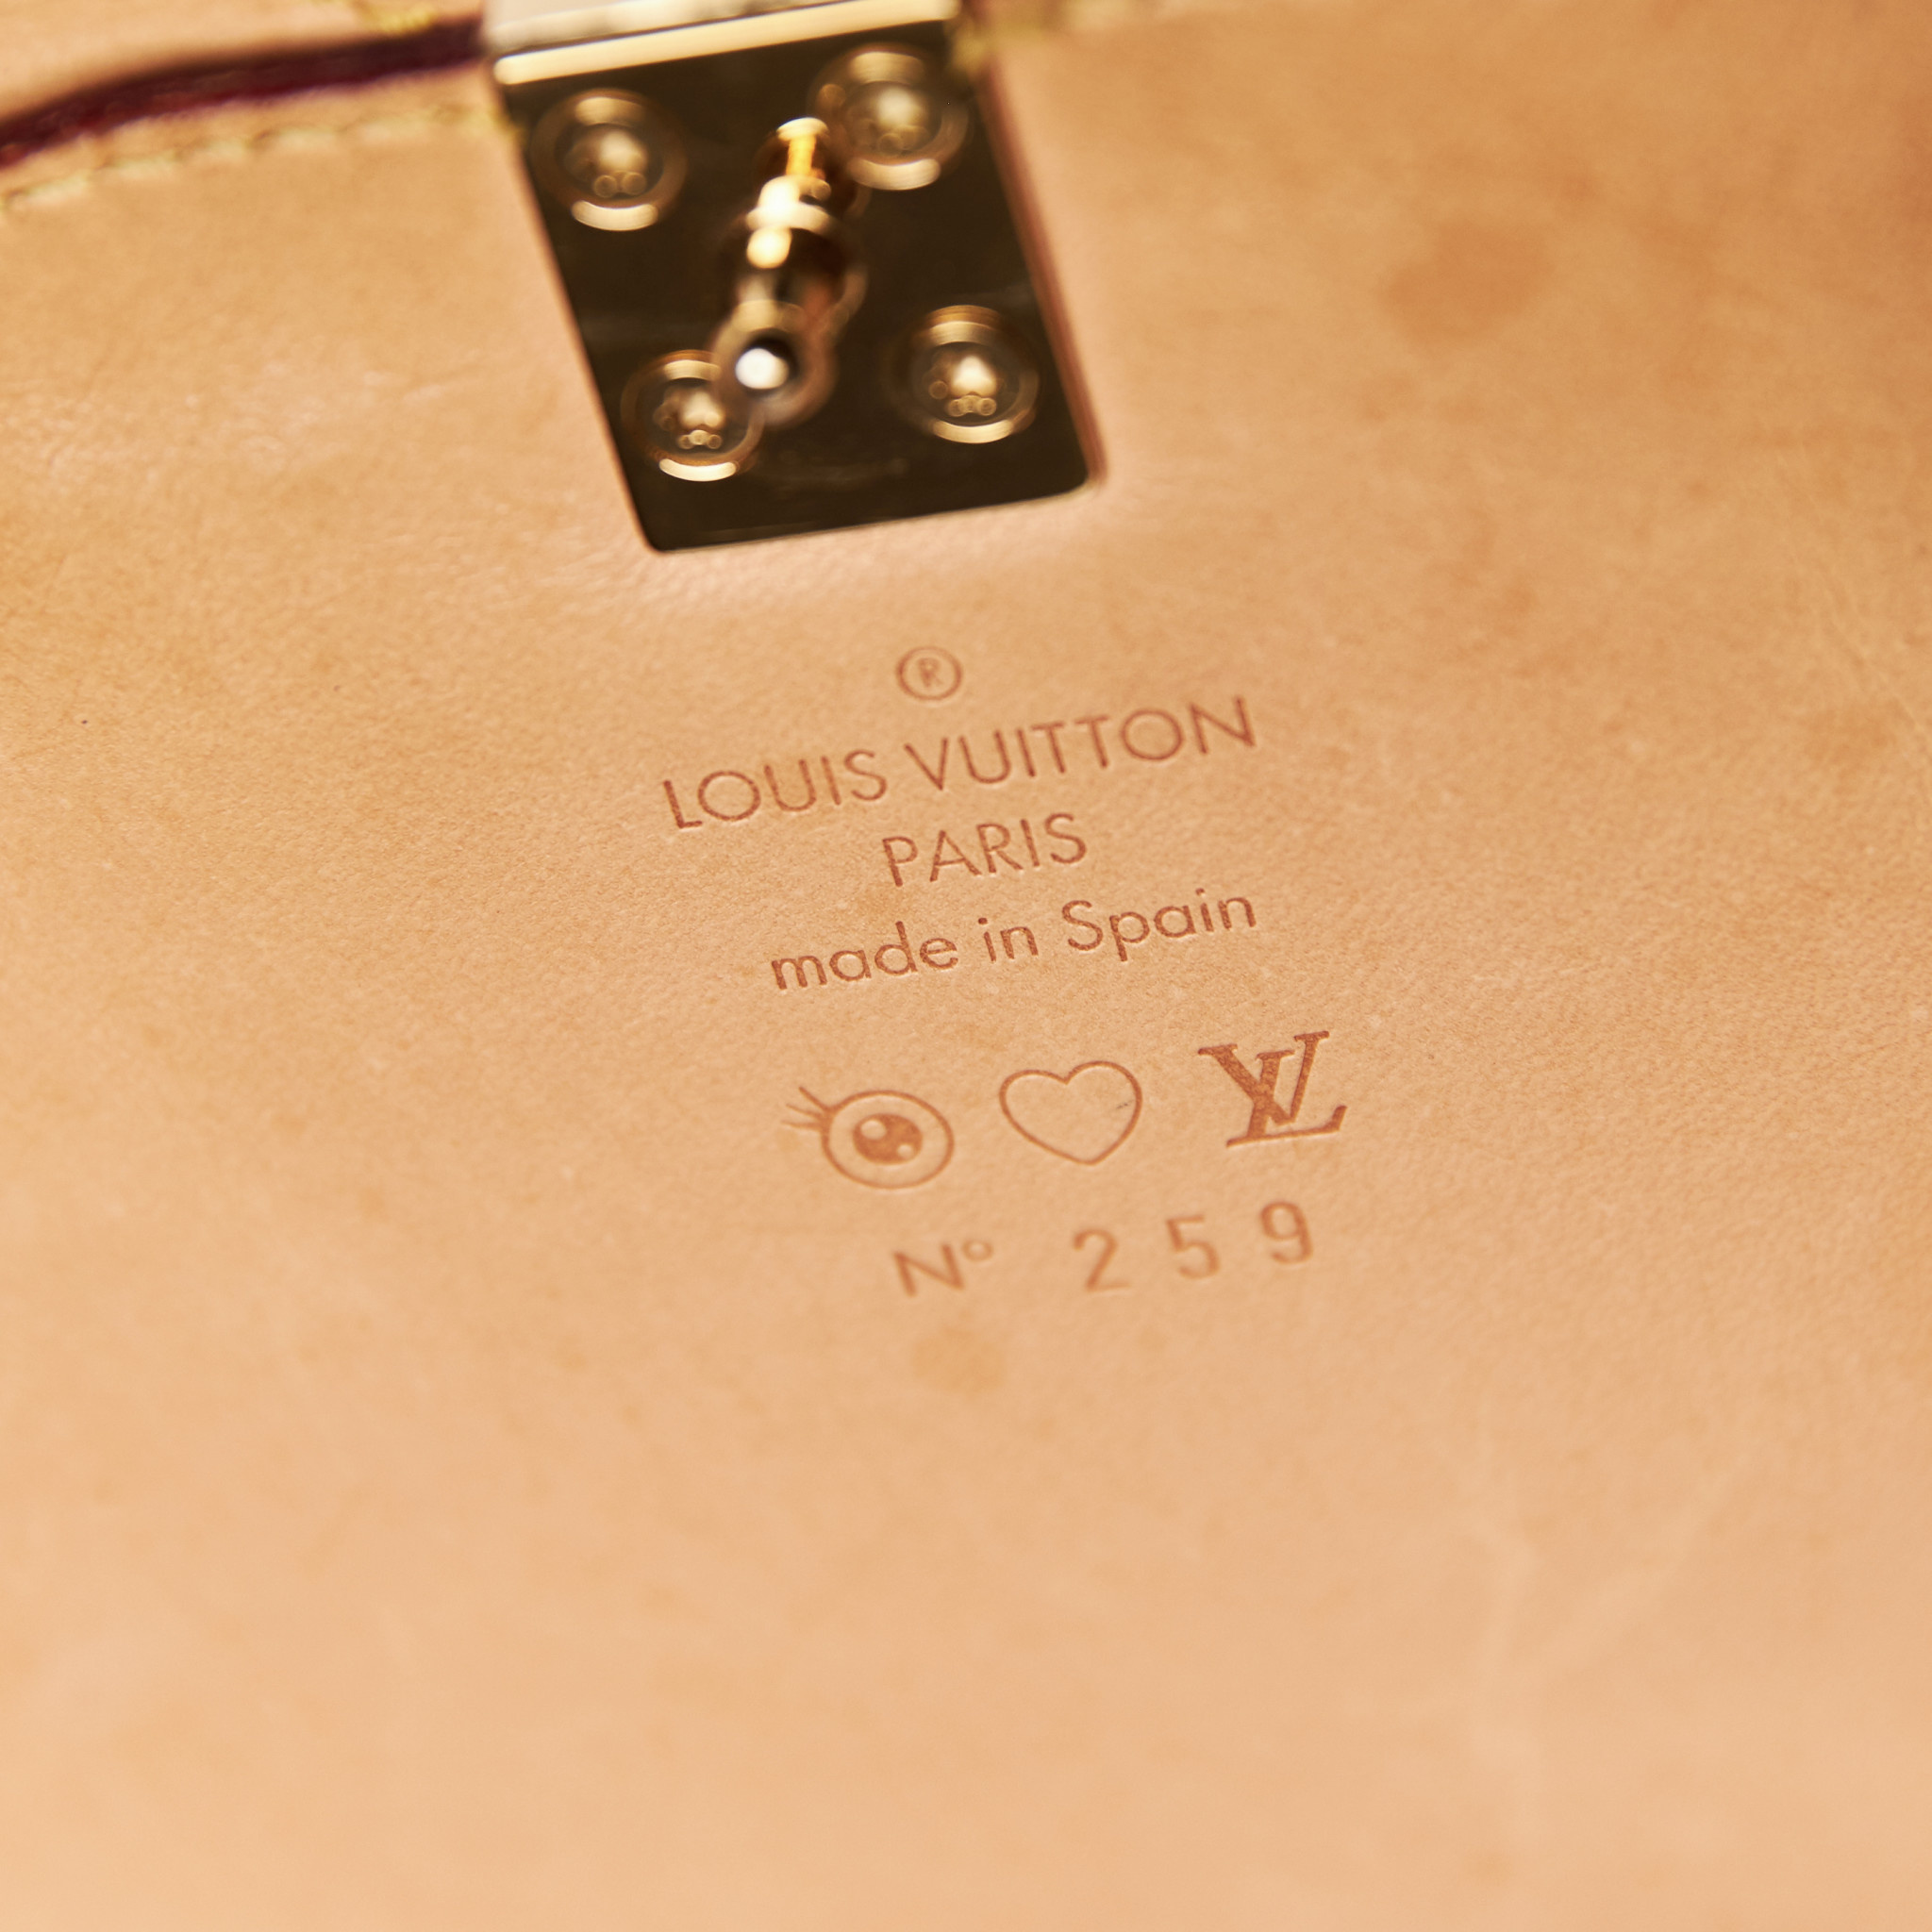 image therapy — Takashi Murakami: Louis Vuitton Eye Love